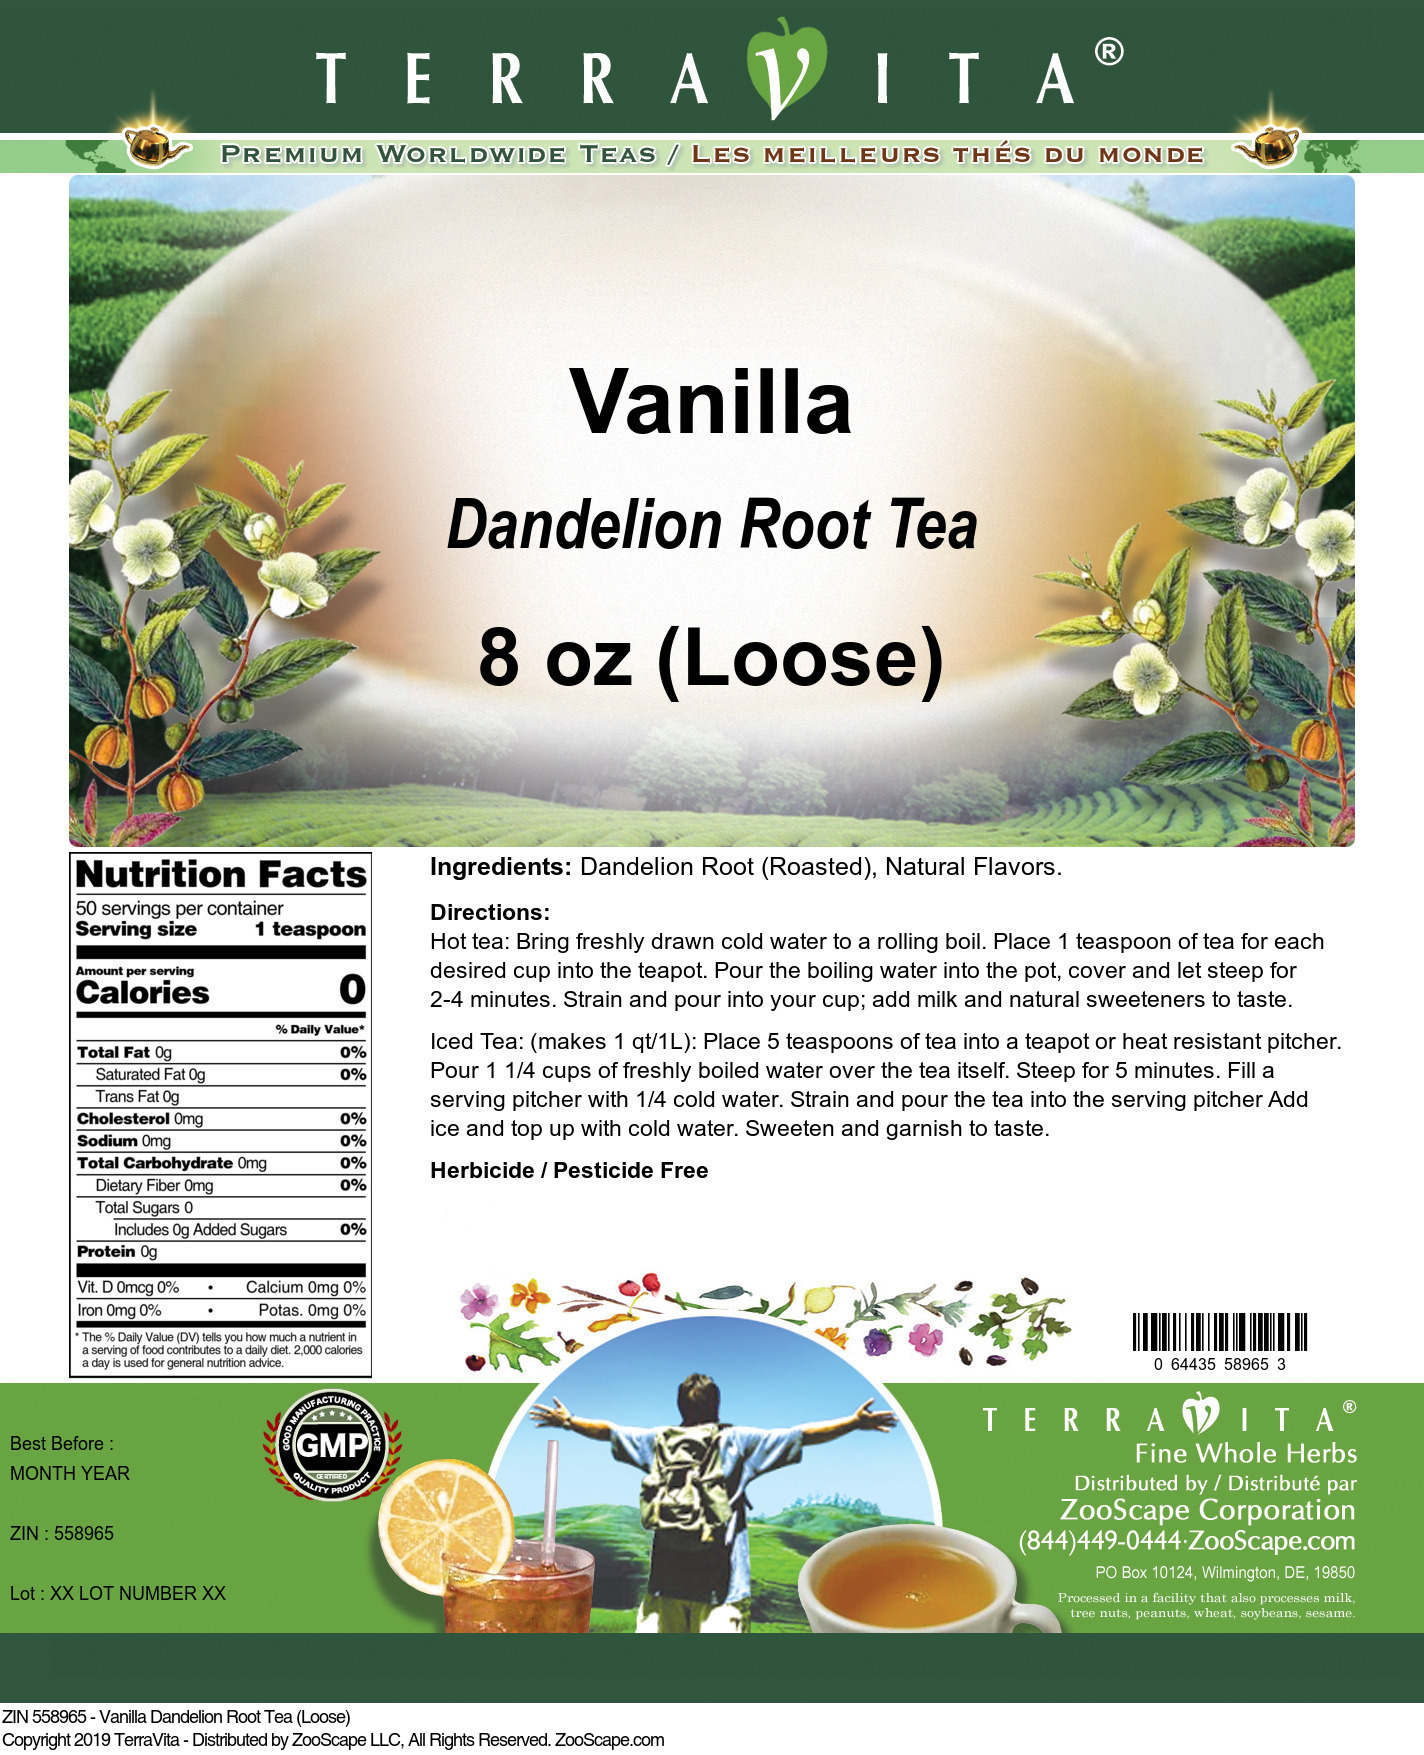 Vanilla Dandelion Root Tea (Loose) - Label